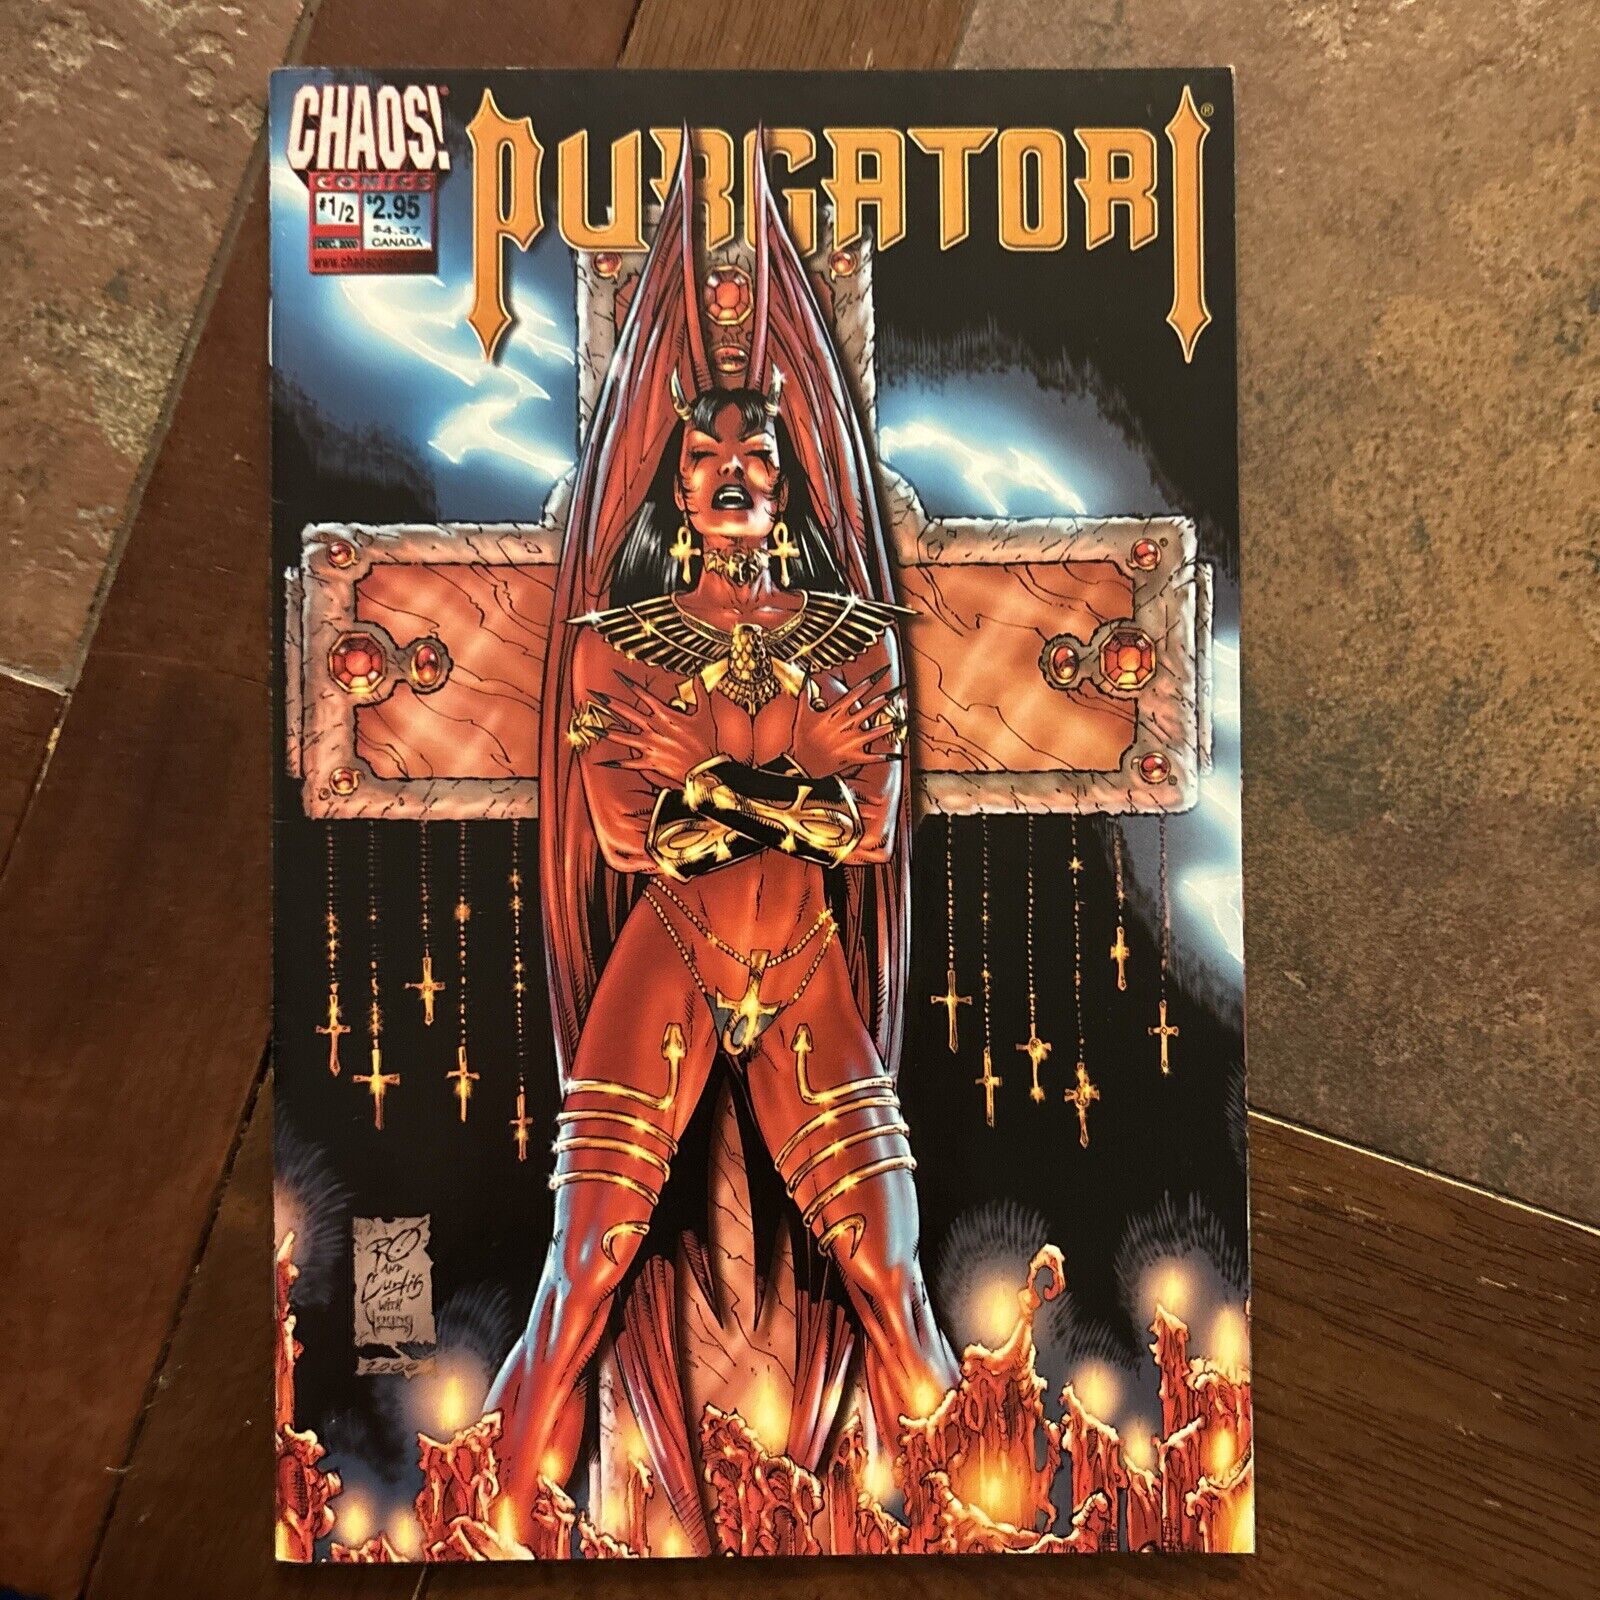 Purgatori #1/2 Chaos Comics Dec 2000 NM/M